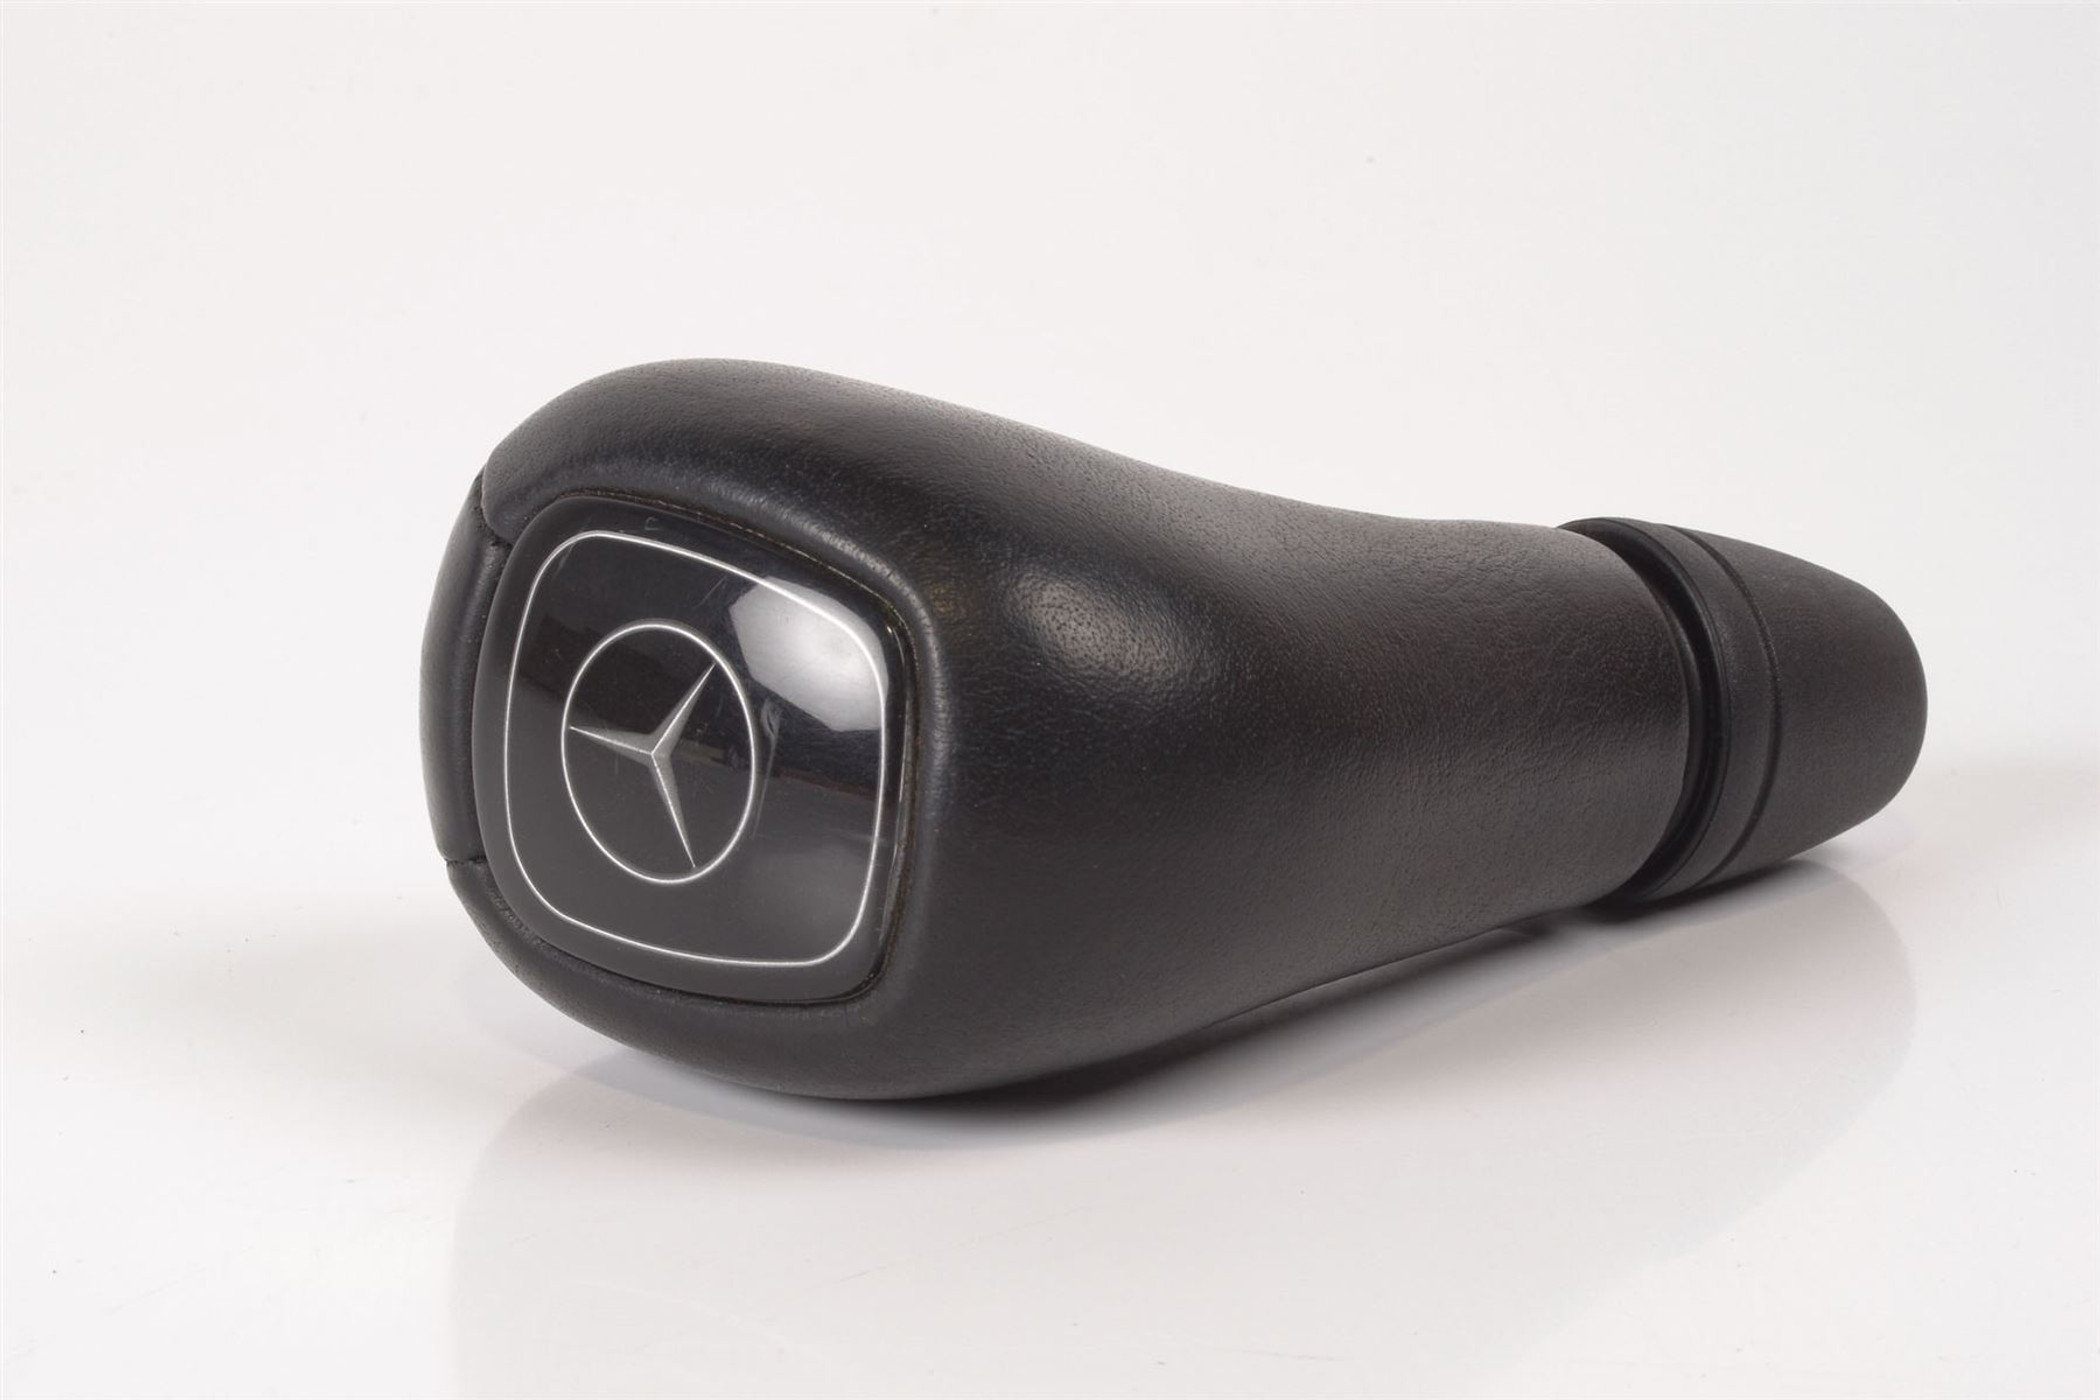 Mercedes-Benz - Interior Parts & Accessories - Gear Knobs - The R129 Co